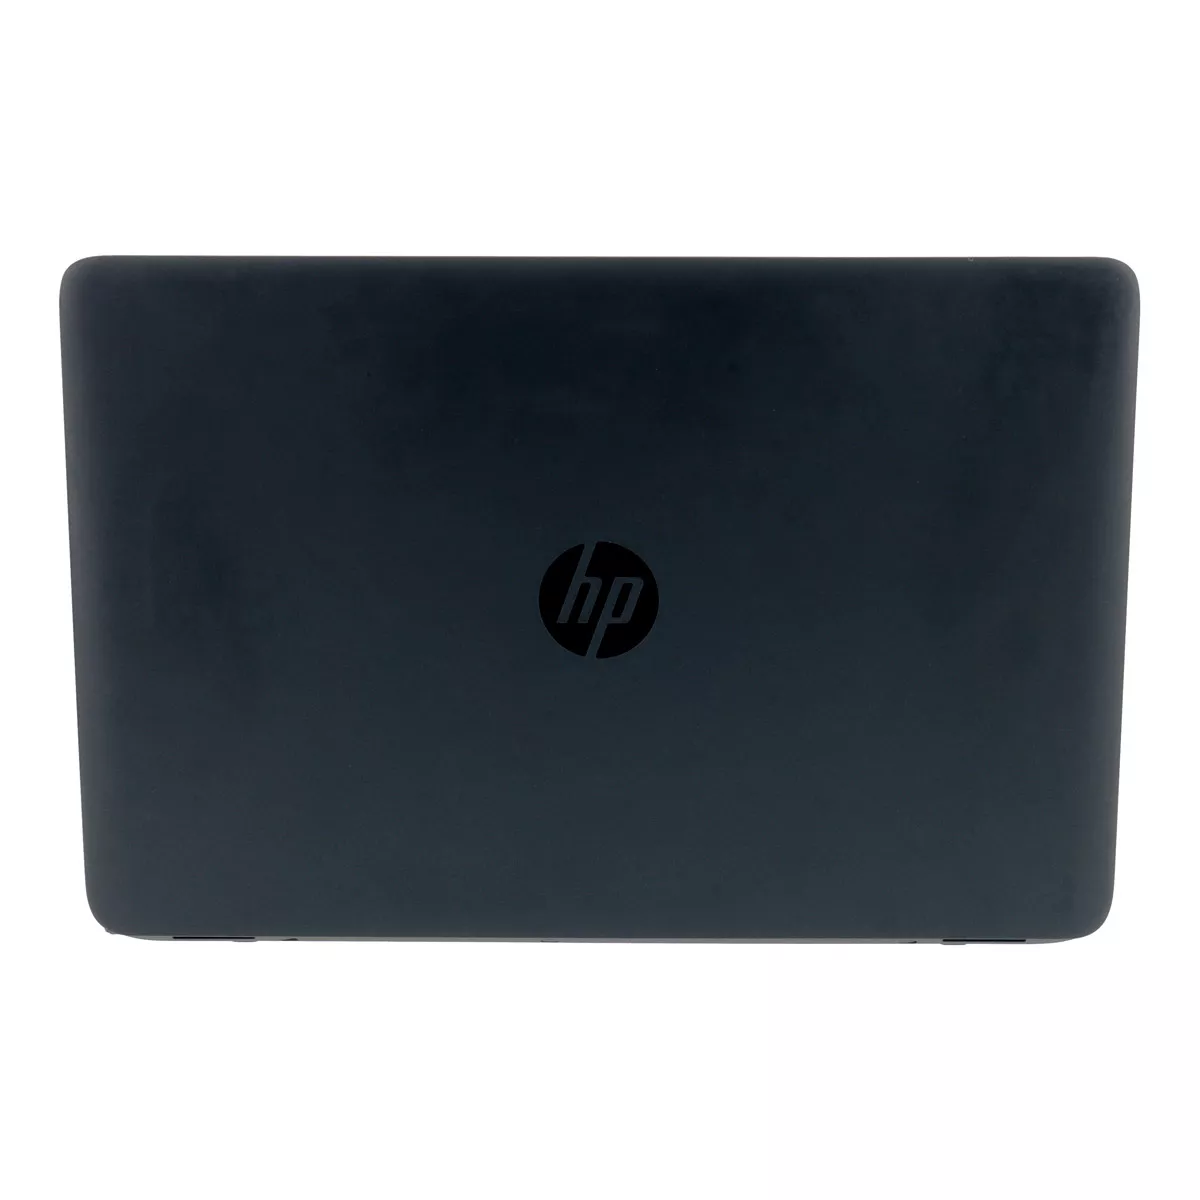 HP EliteBook 850 G2 Core i5 5300U 8 GB 500 GB HDD A+